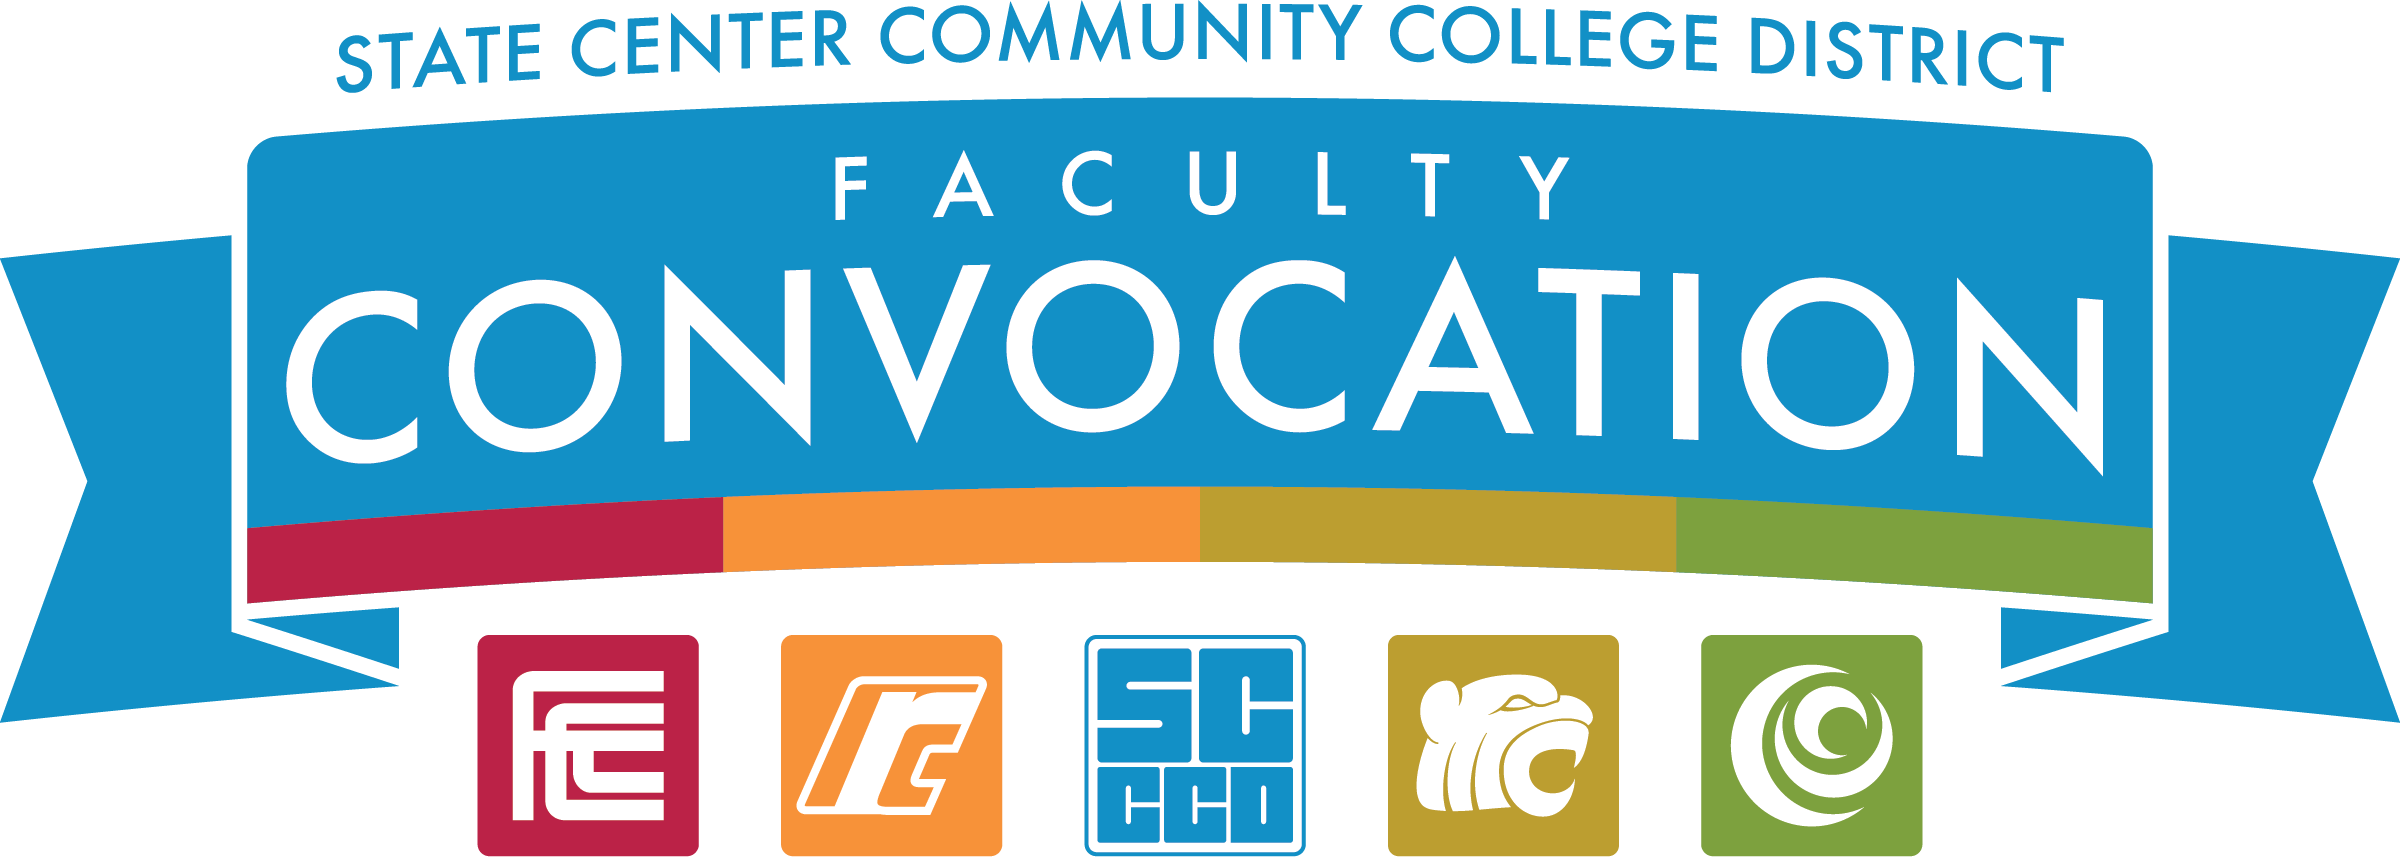 Faculty Convocation logo